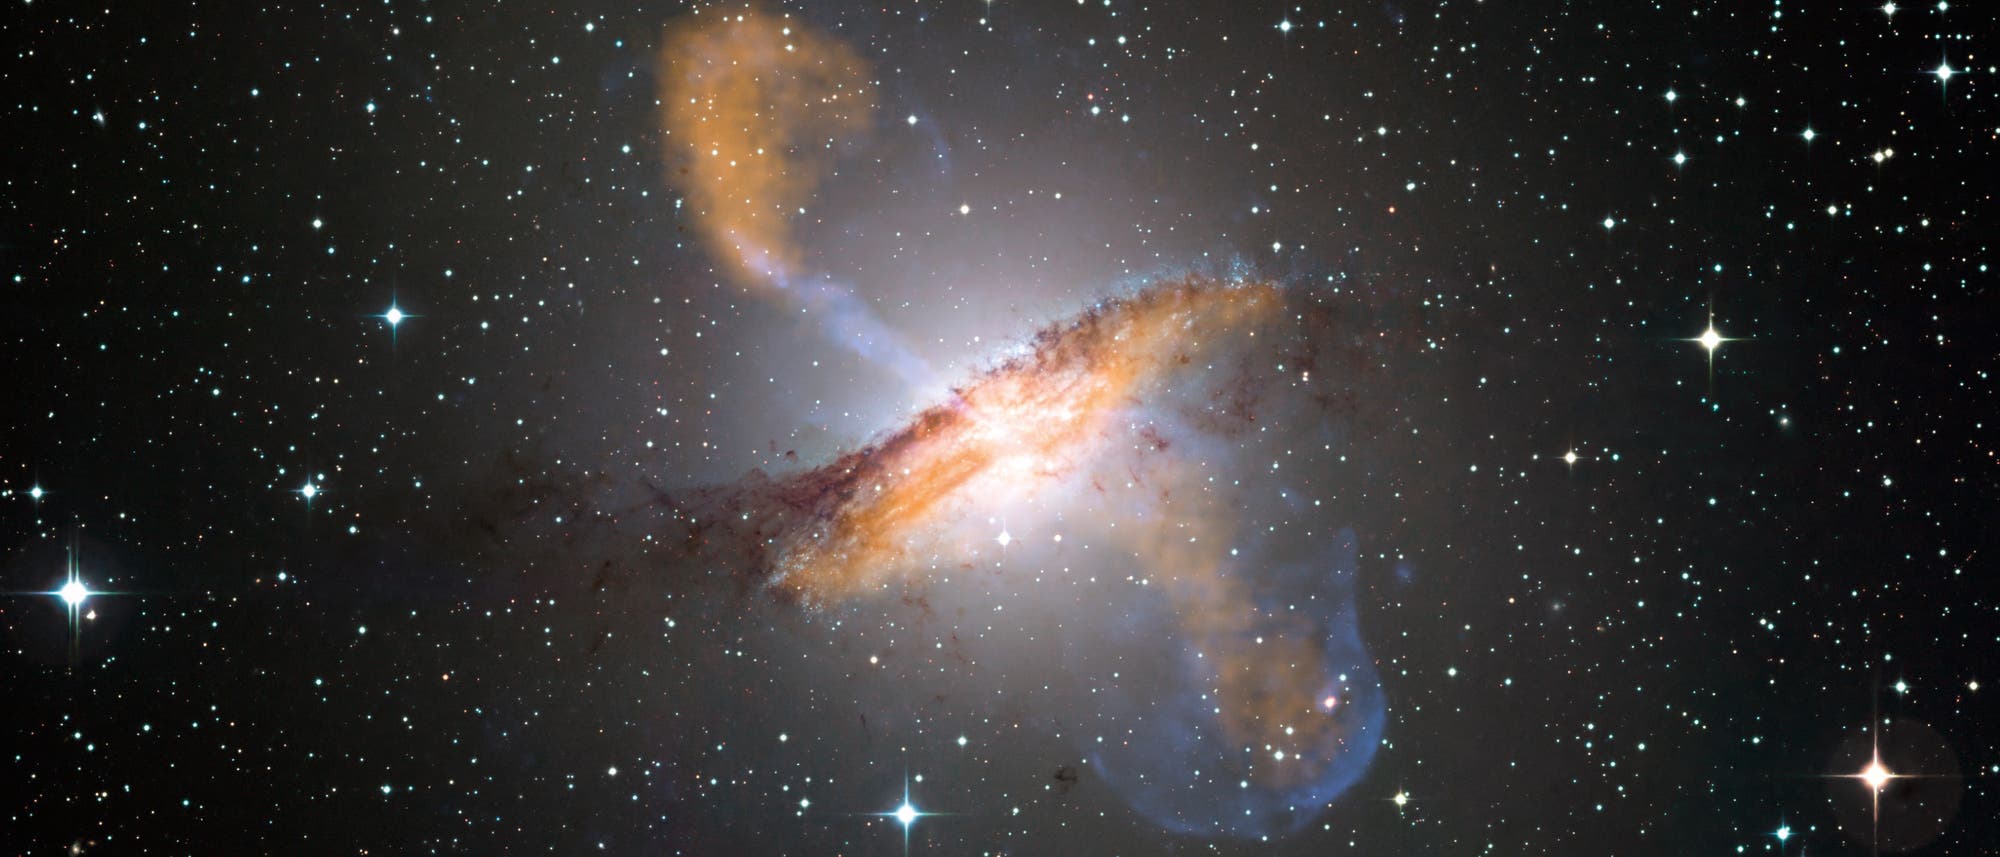 Radiogalaxie Centaurus A